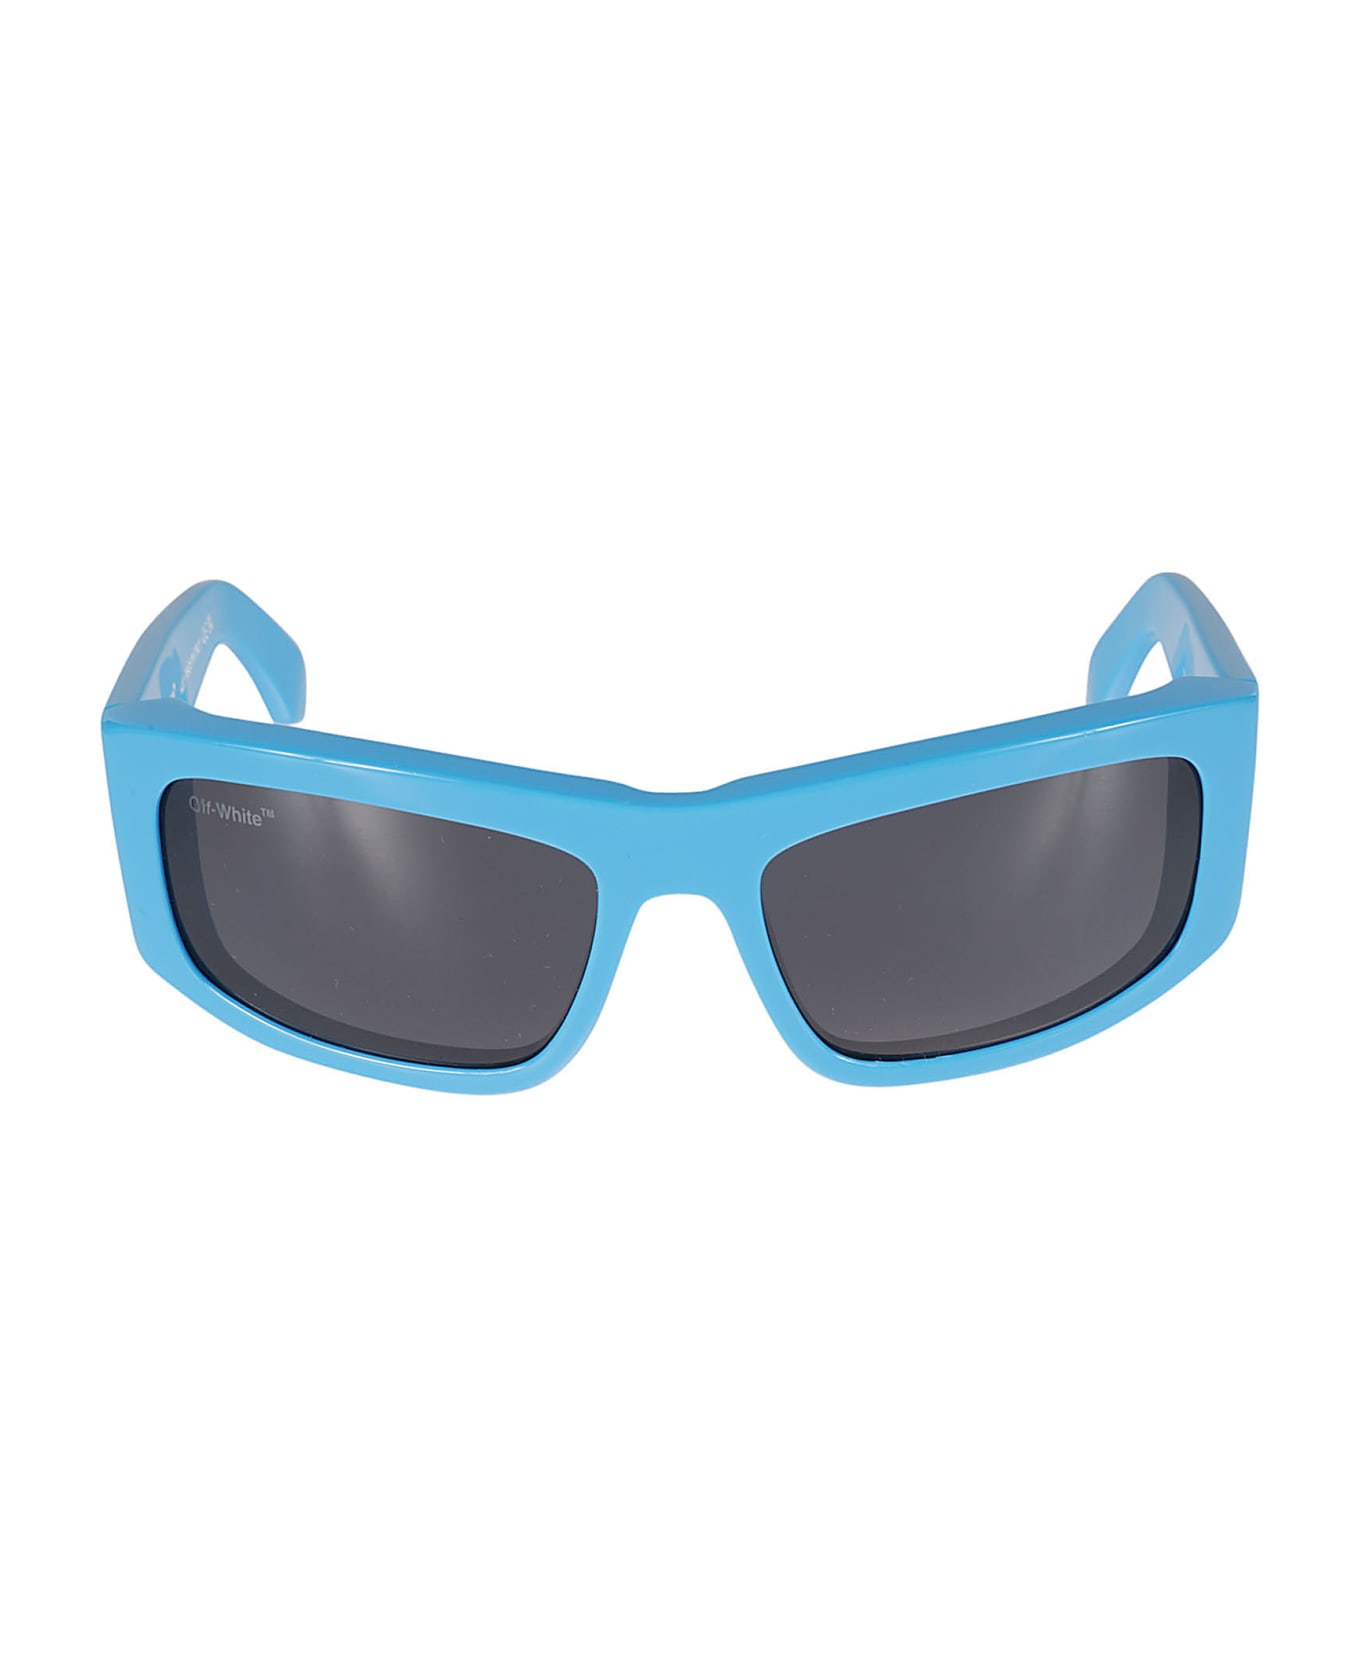 Off-White Joseph Sunglasses - Blue